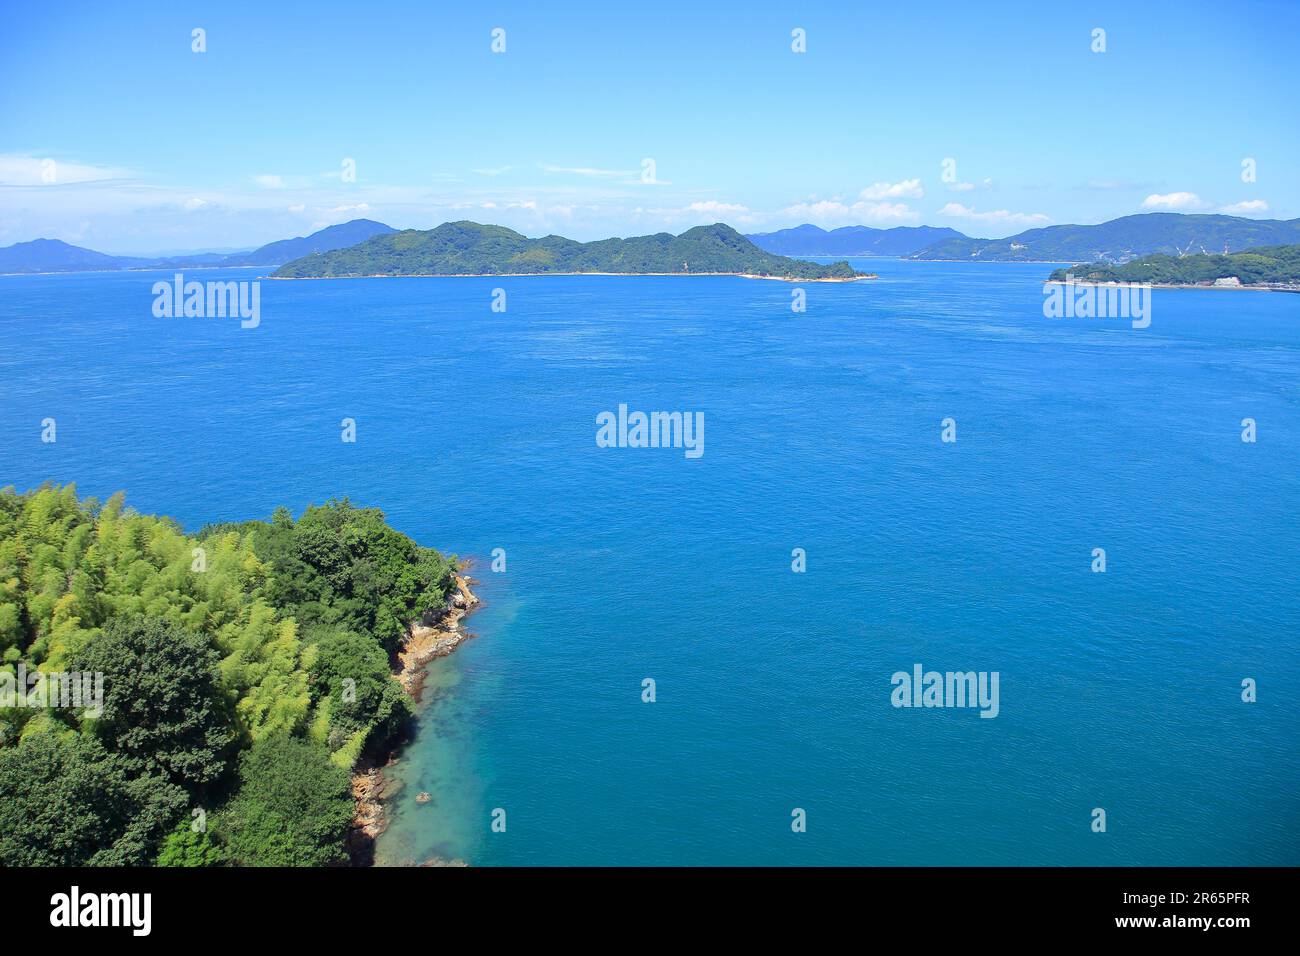 Islands in the Seto Inland Sea Stock Photo